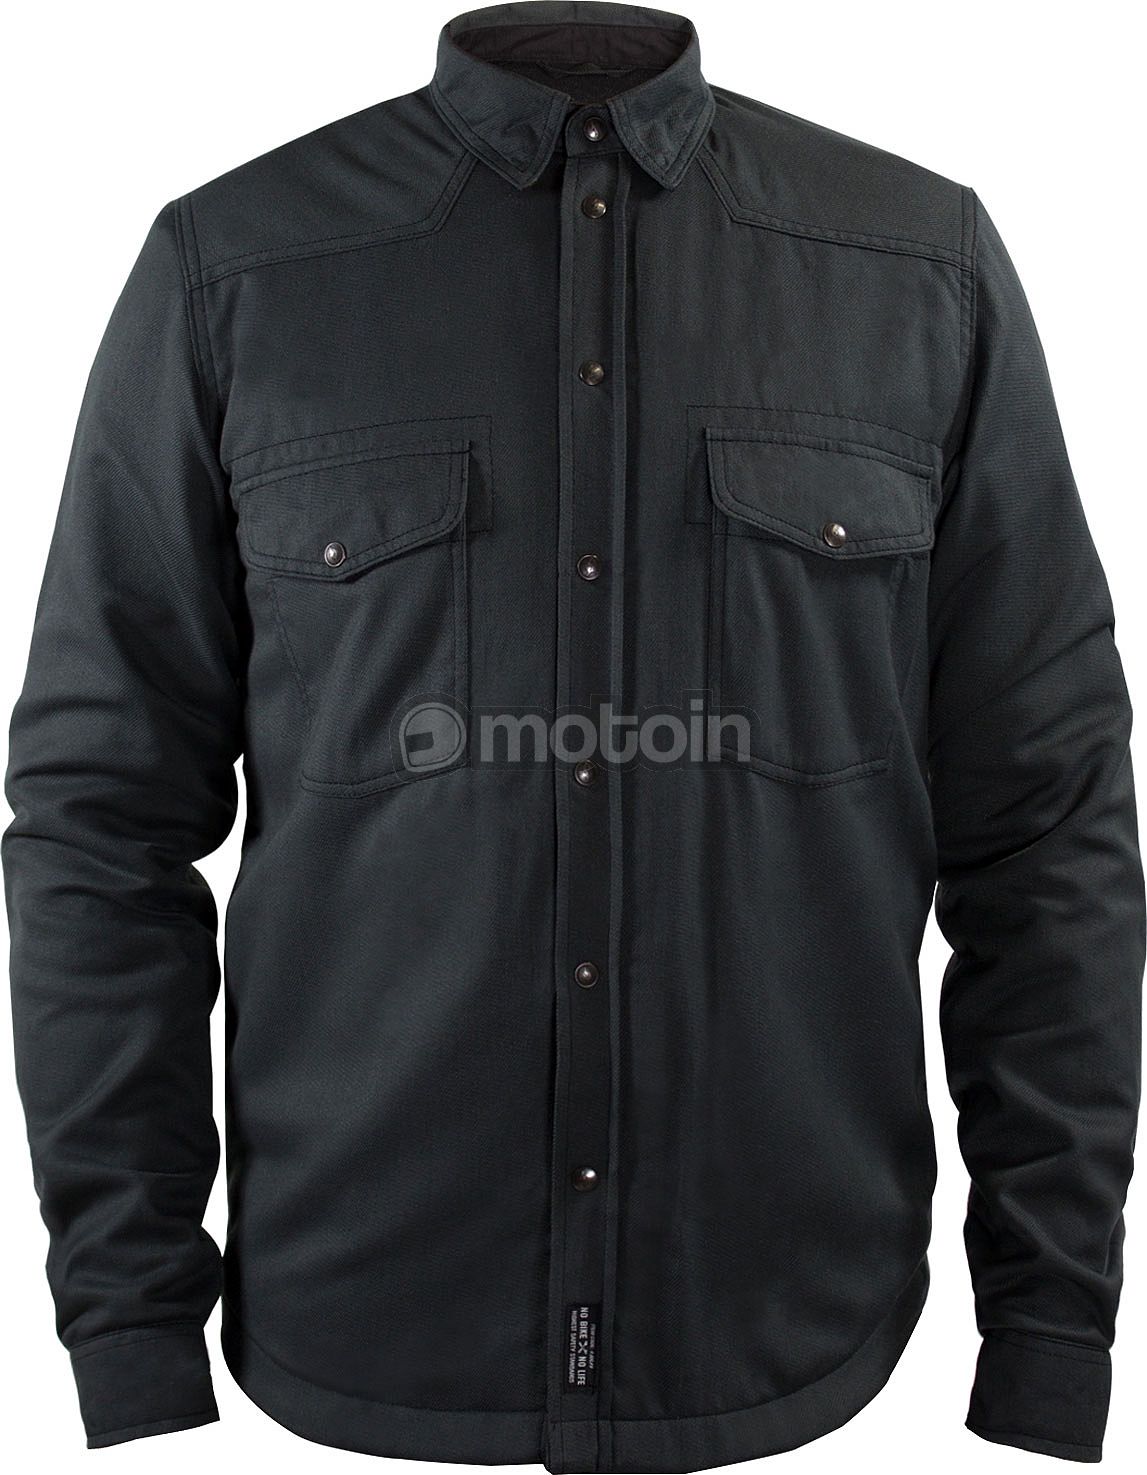 John Doe Motoshirt, Hemd/Textiljacke